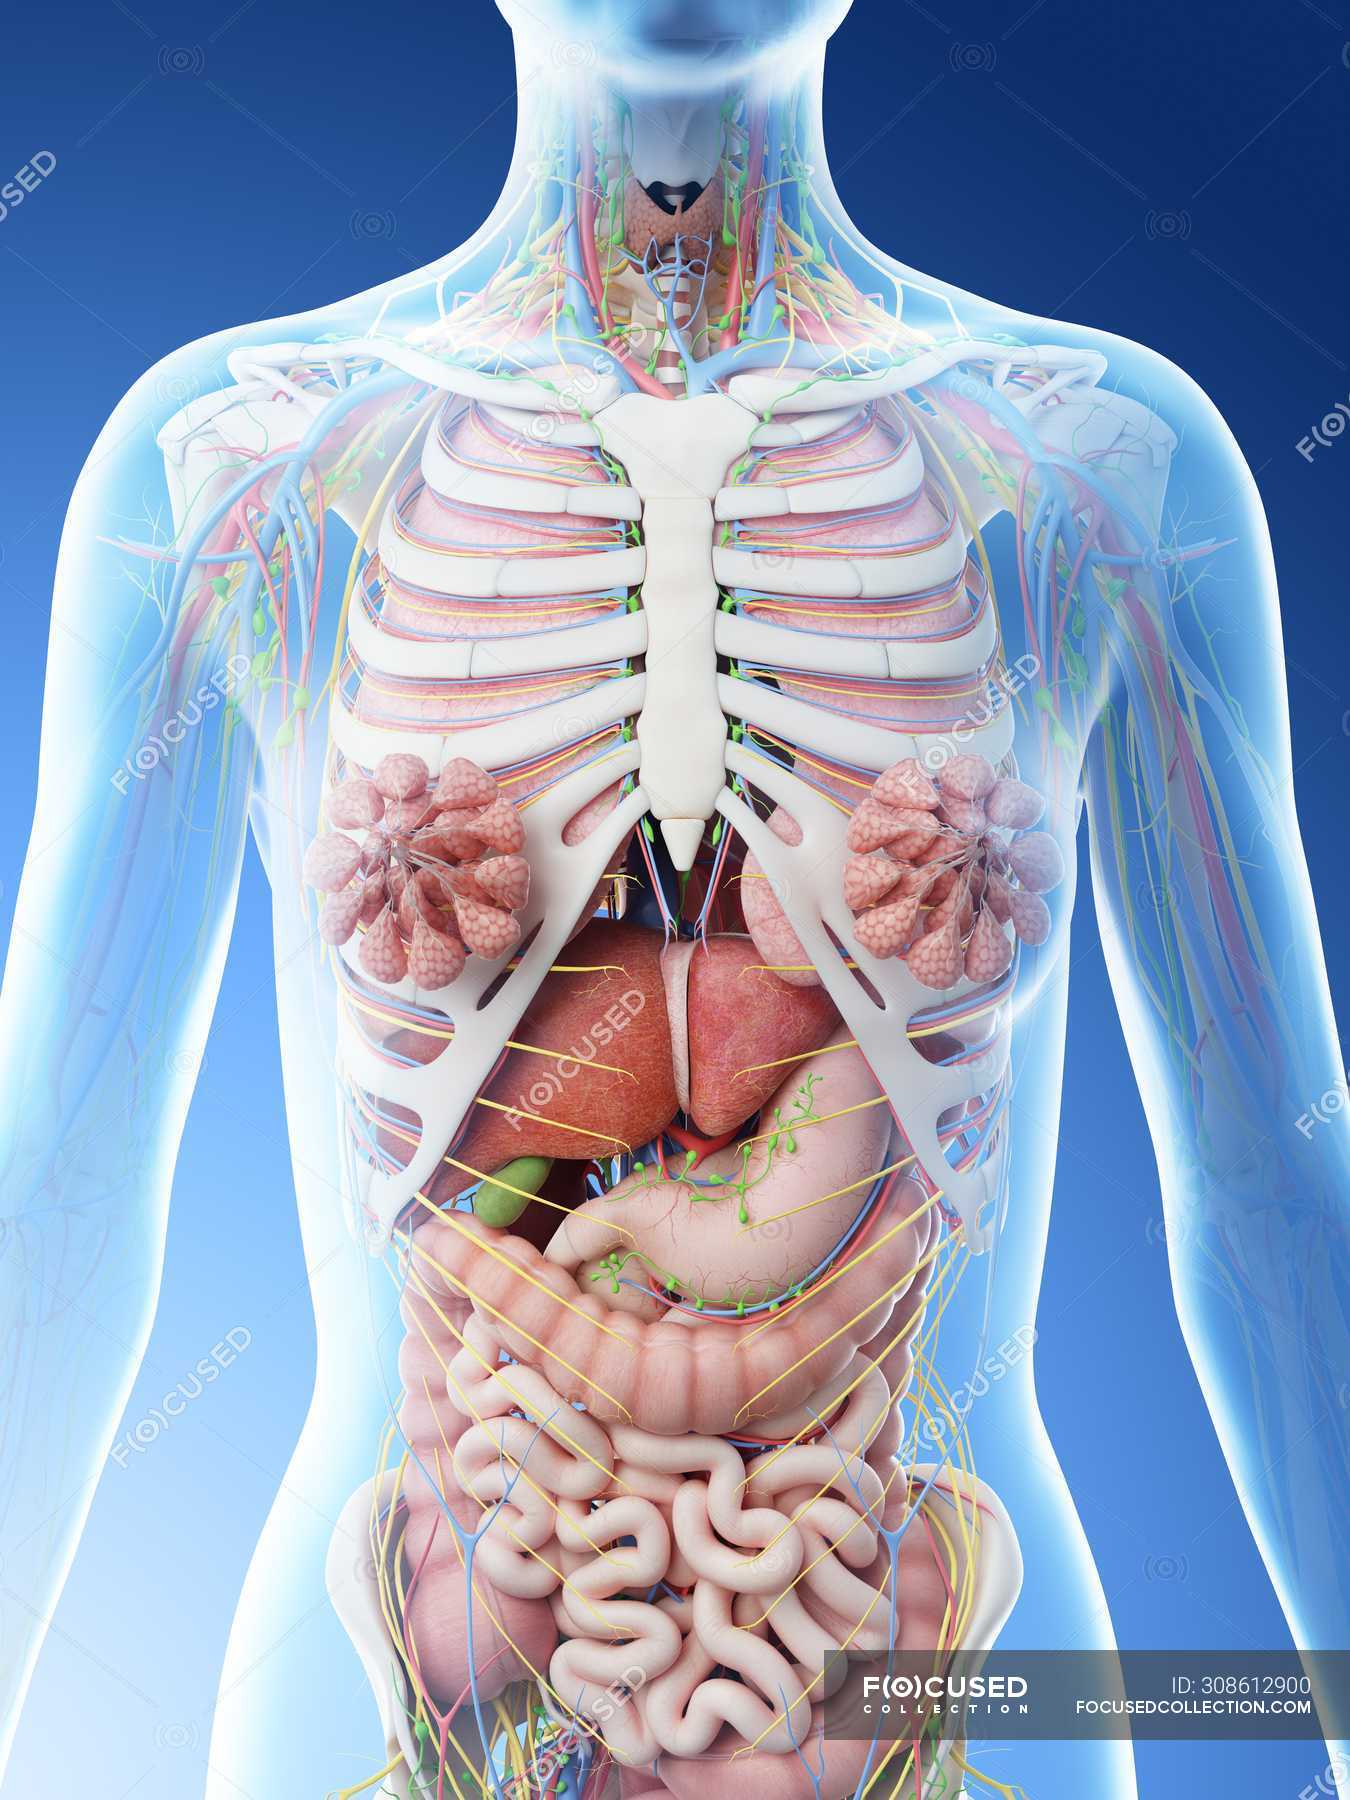 Female upper body anatomy and internal organs, computer illustration